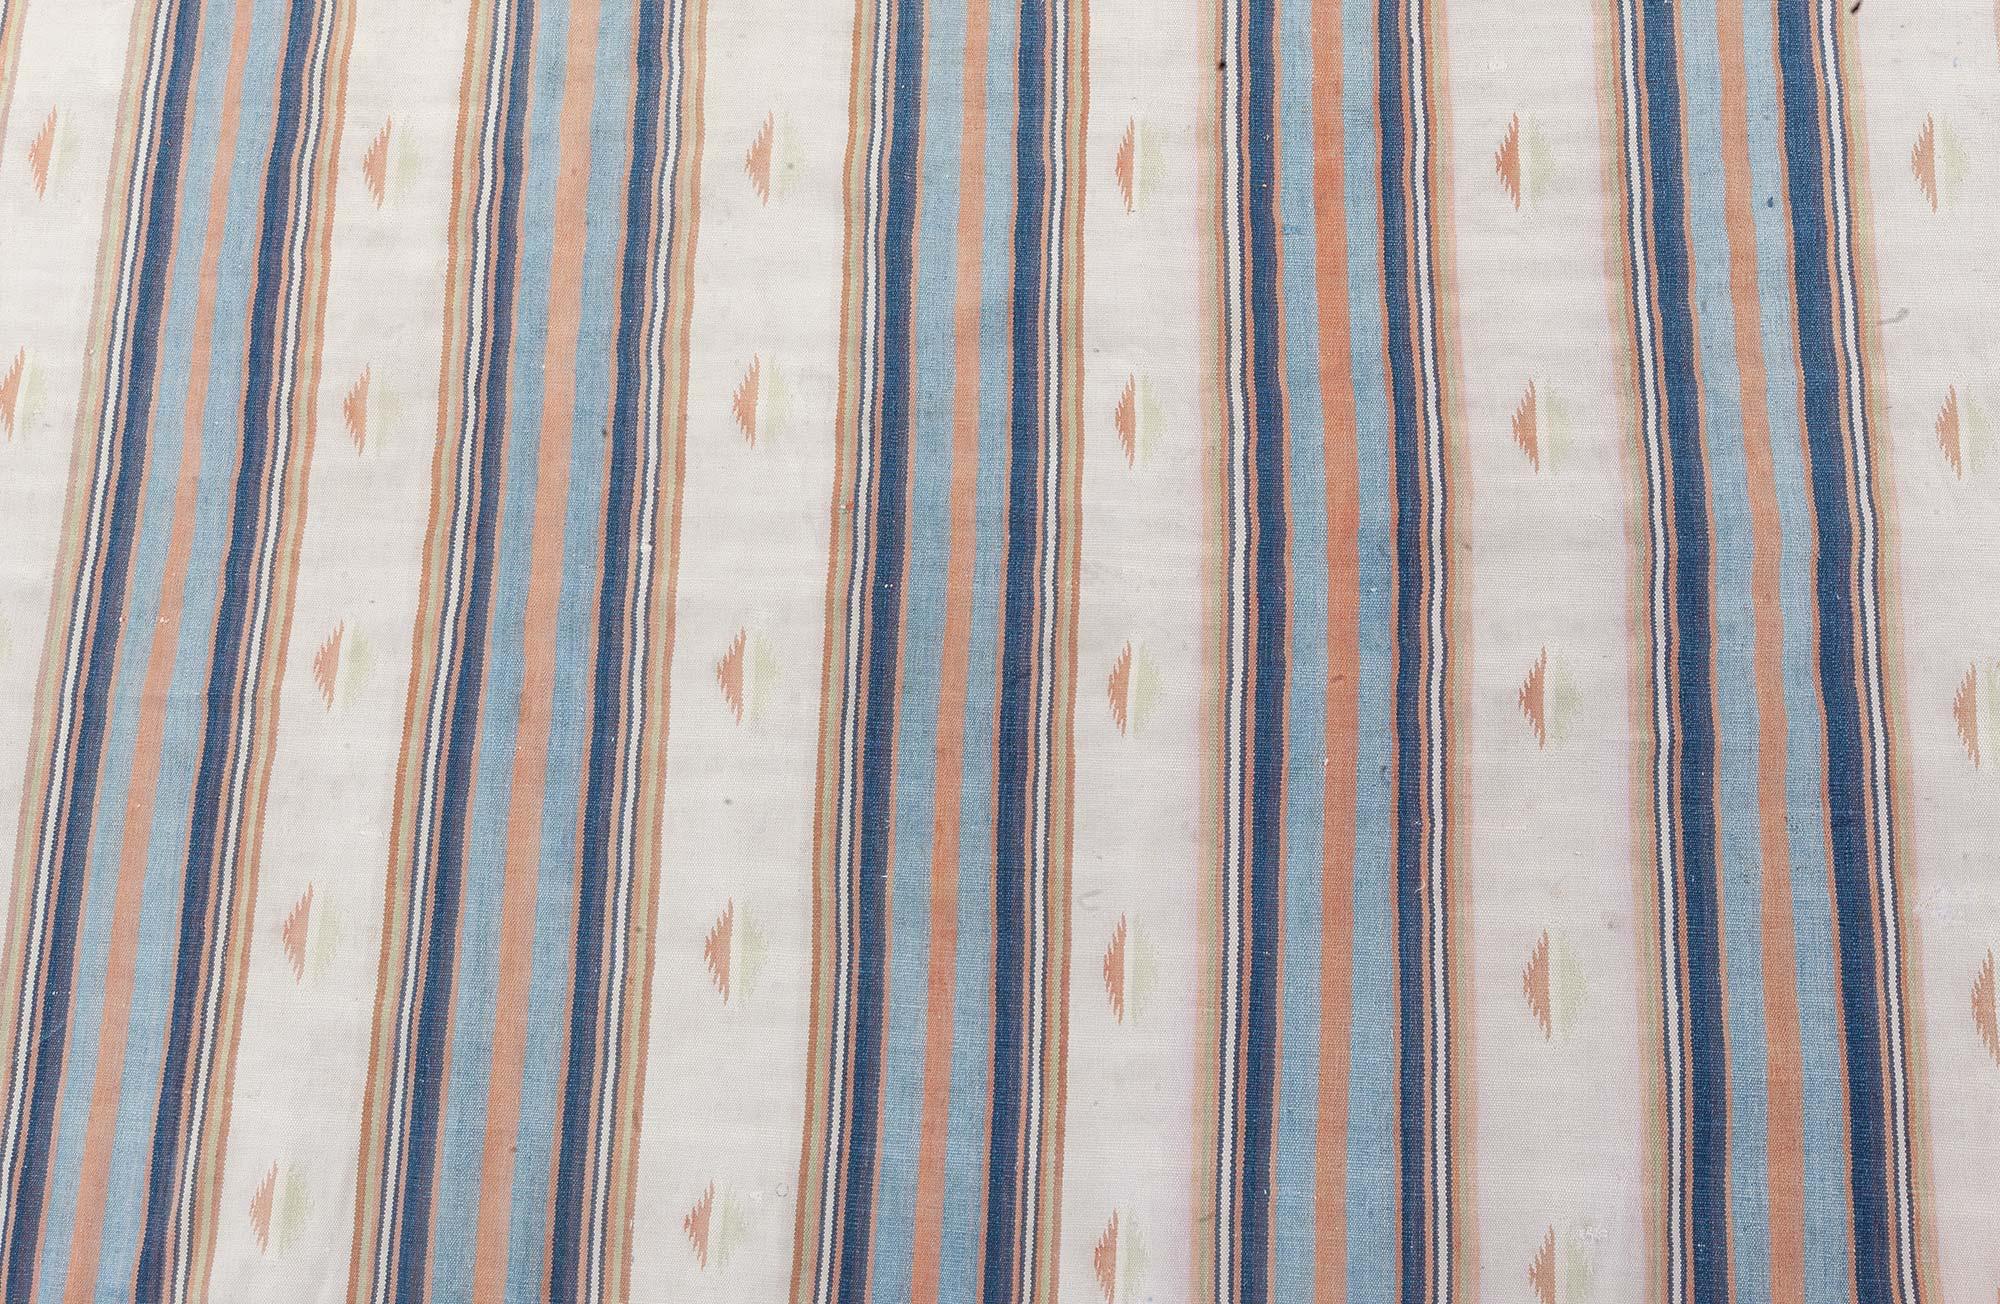 Vintage Indian Dhurrie striped rug
Size: 13'5